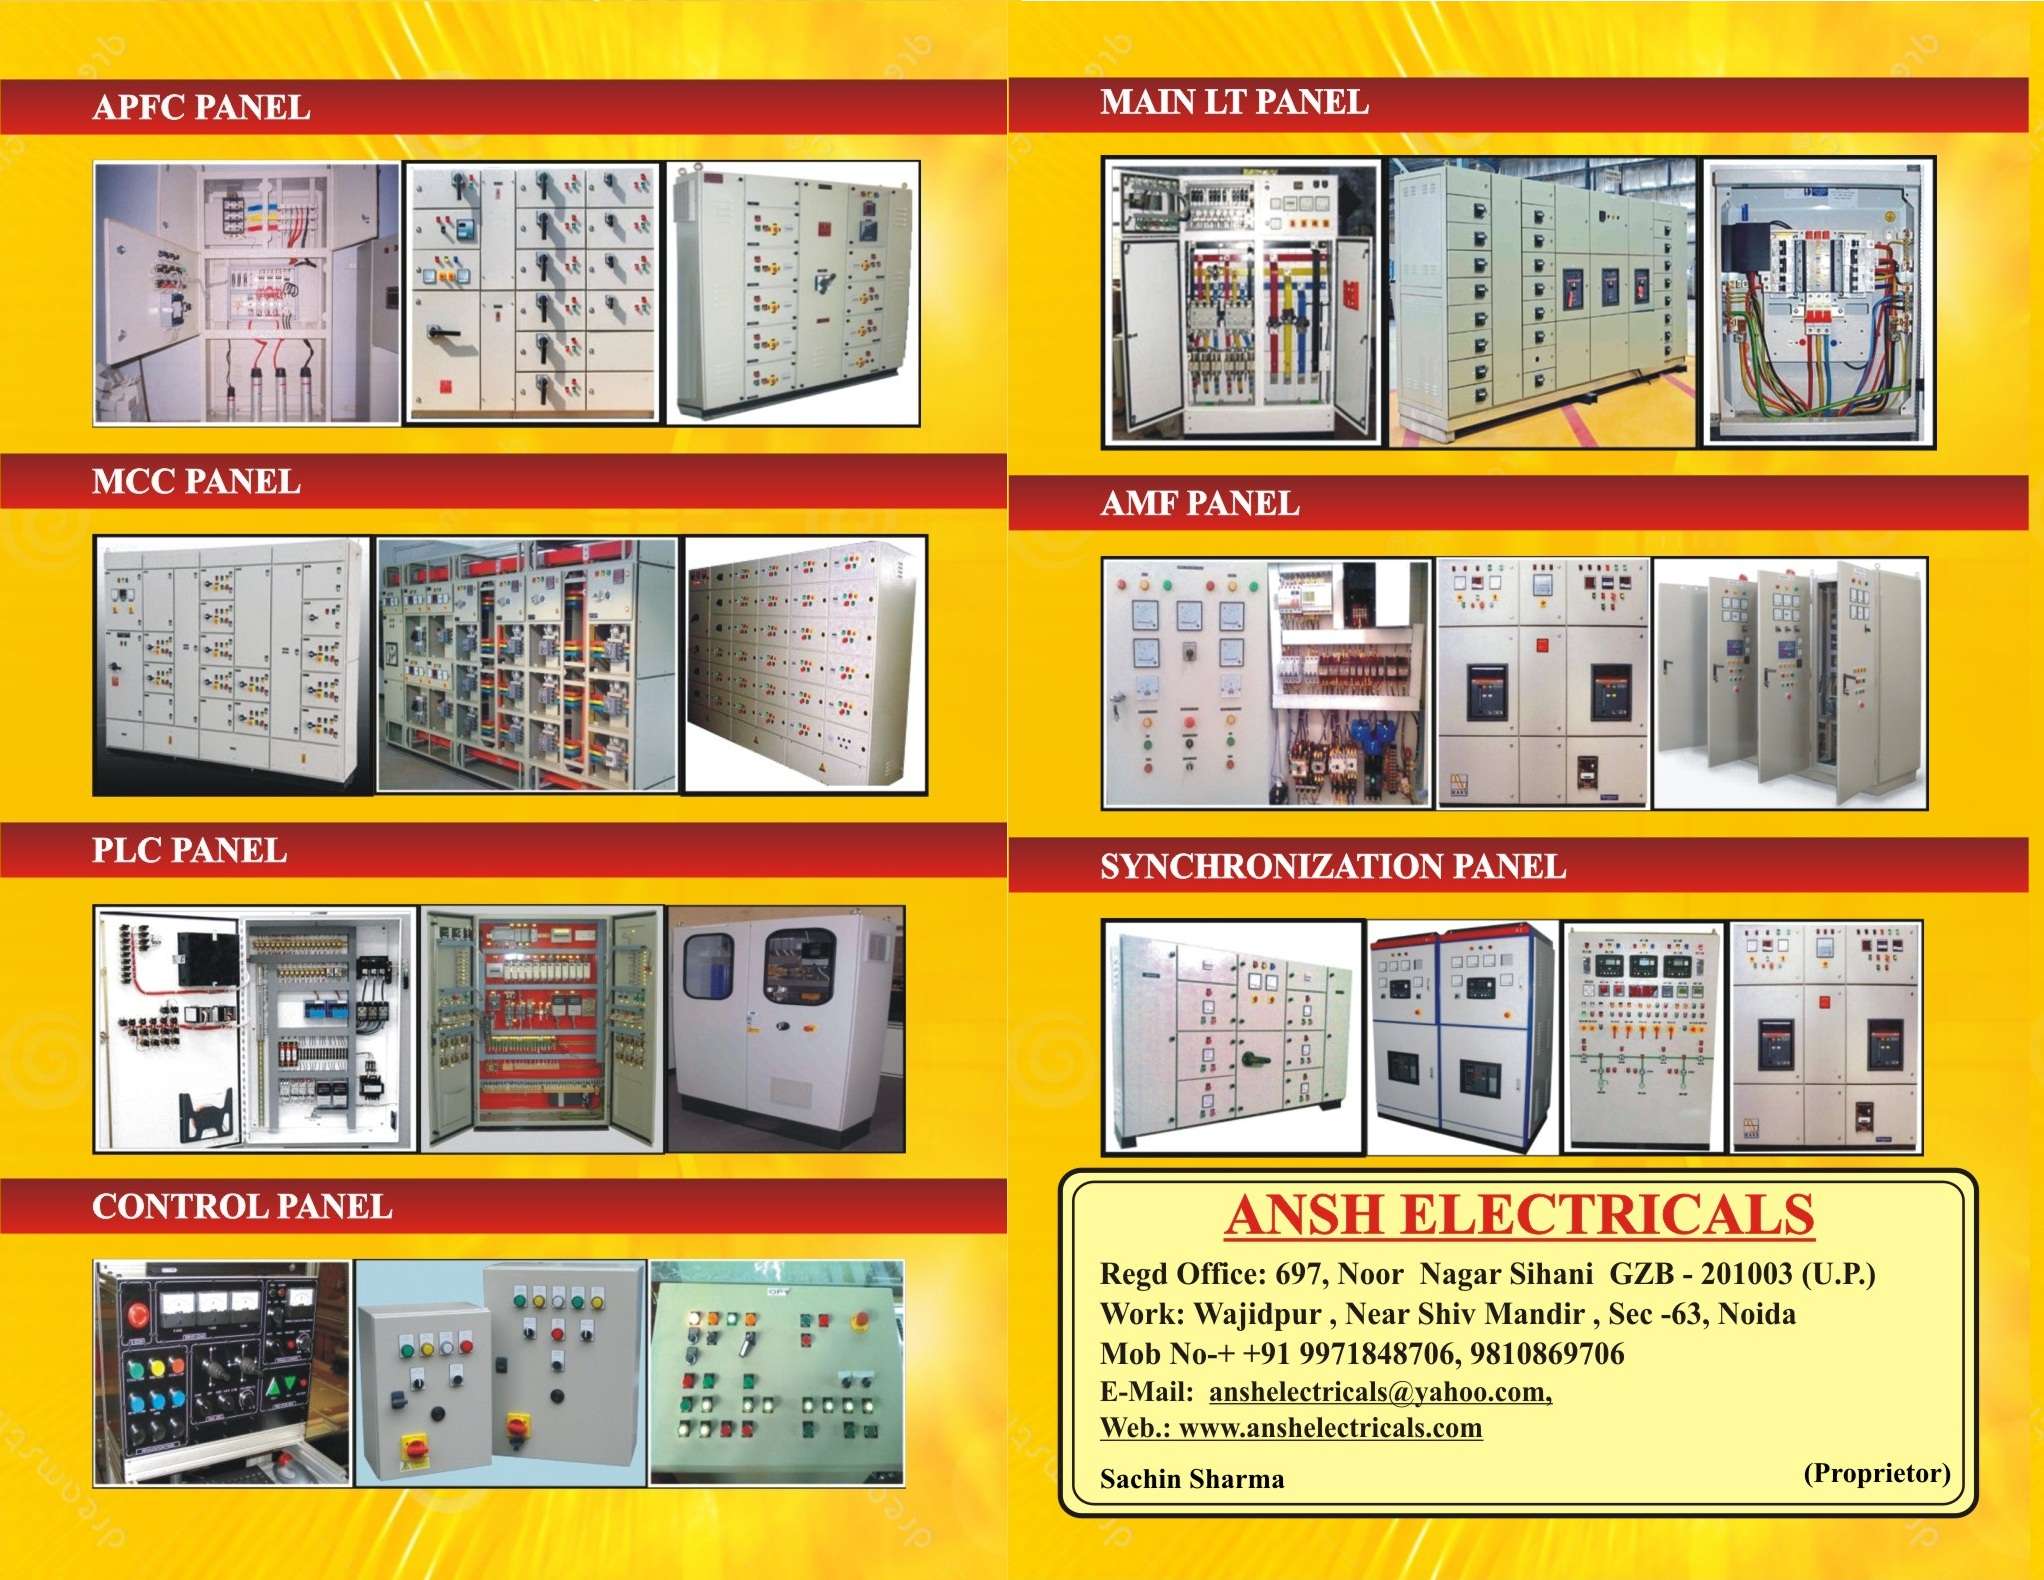 Ansh Electricals